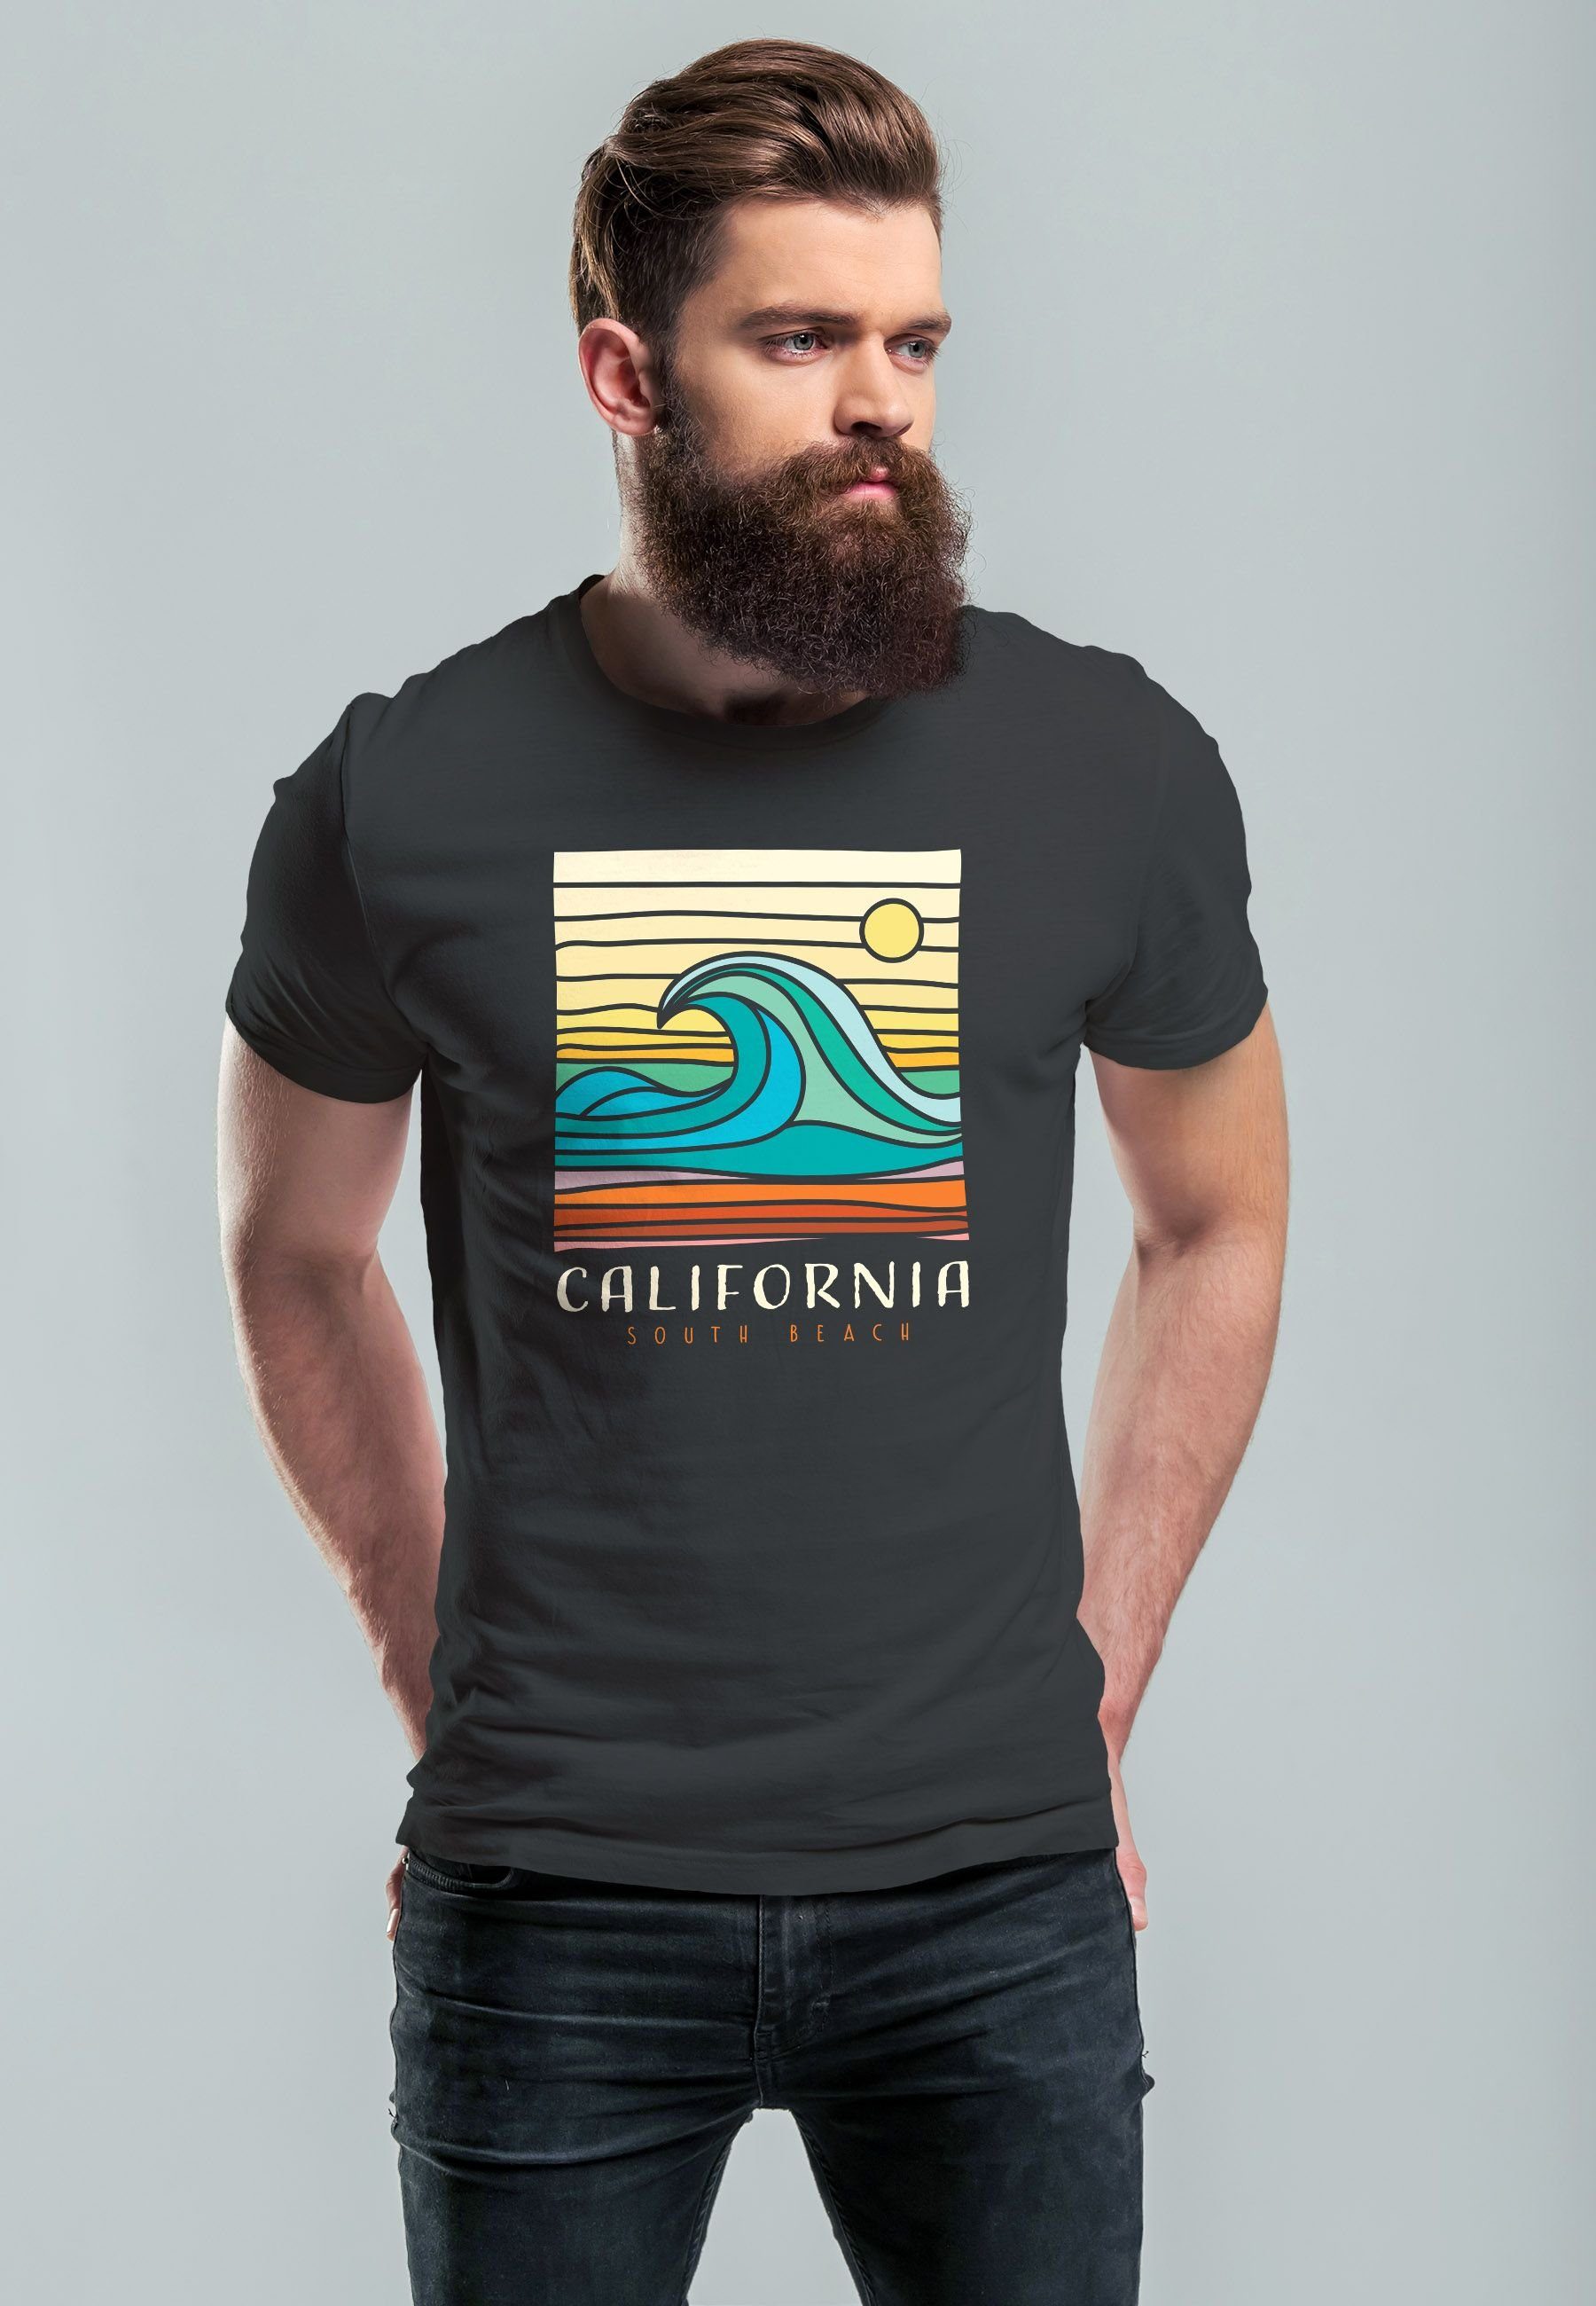 Neverless Print-Shirt Herren T-Shirt Aufdruc Wave Print Surfing Beach South mit Print Welle anthrazit California